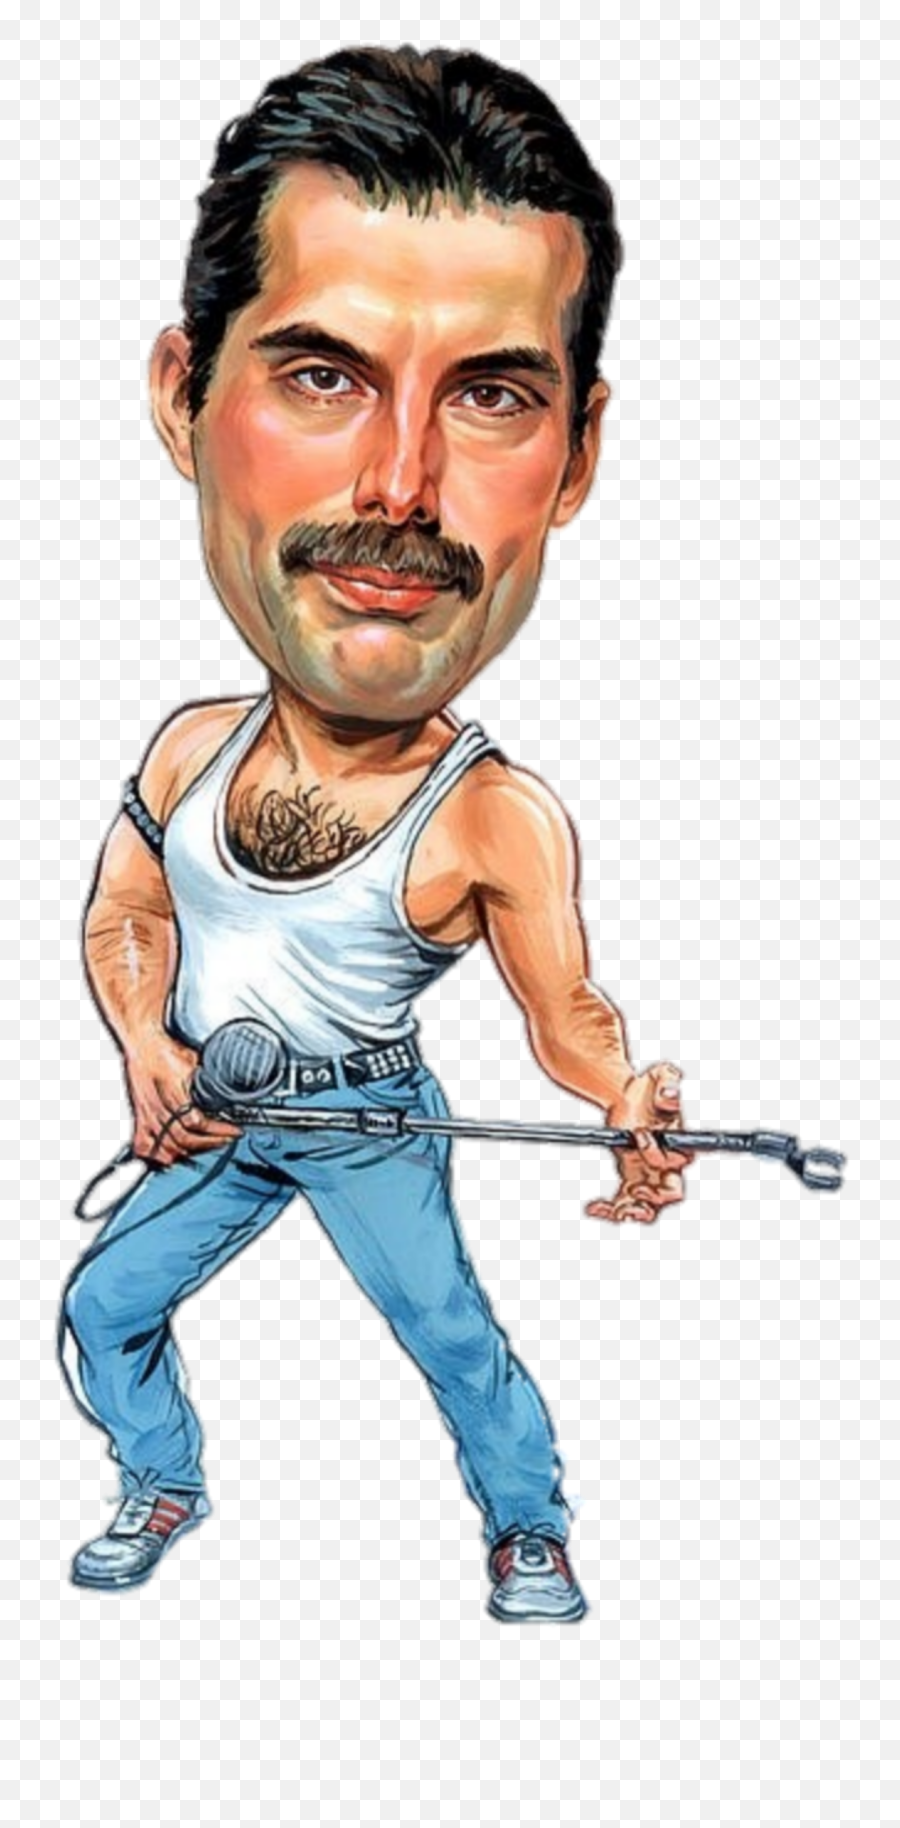 The Most Edited Freddymercury Picsart - Freddie Mercury As Cartoons Png,Killer Queen Icon